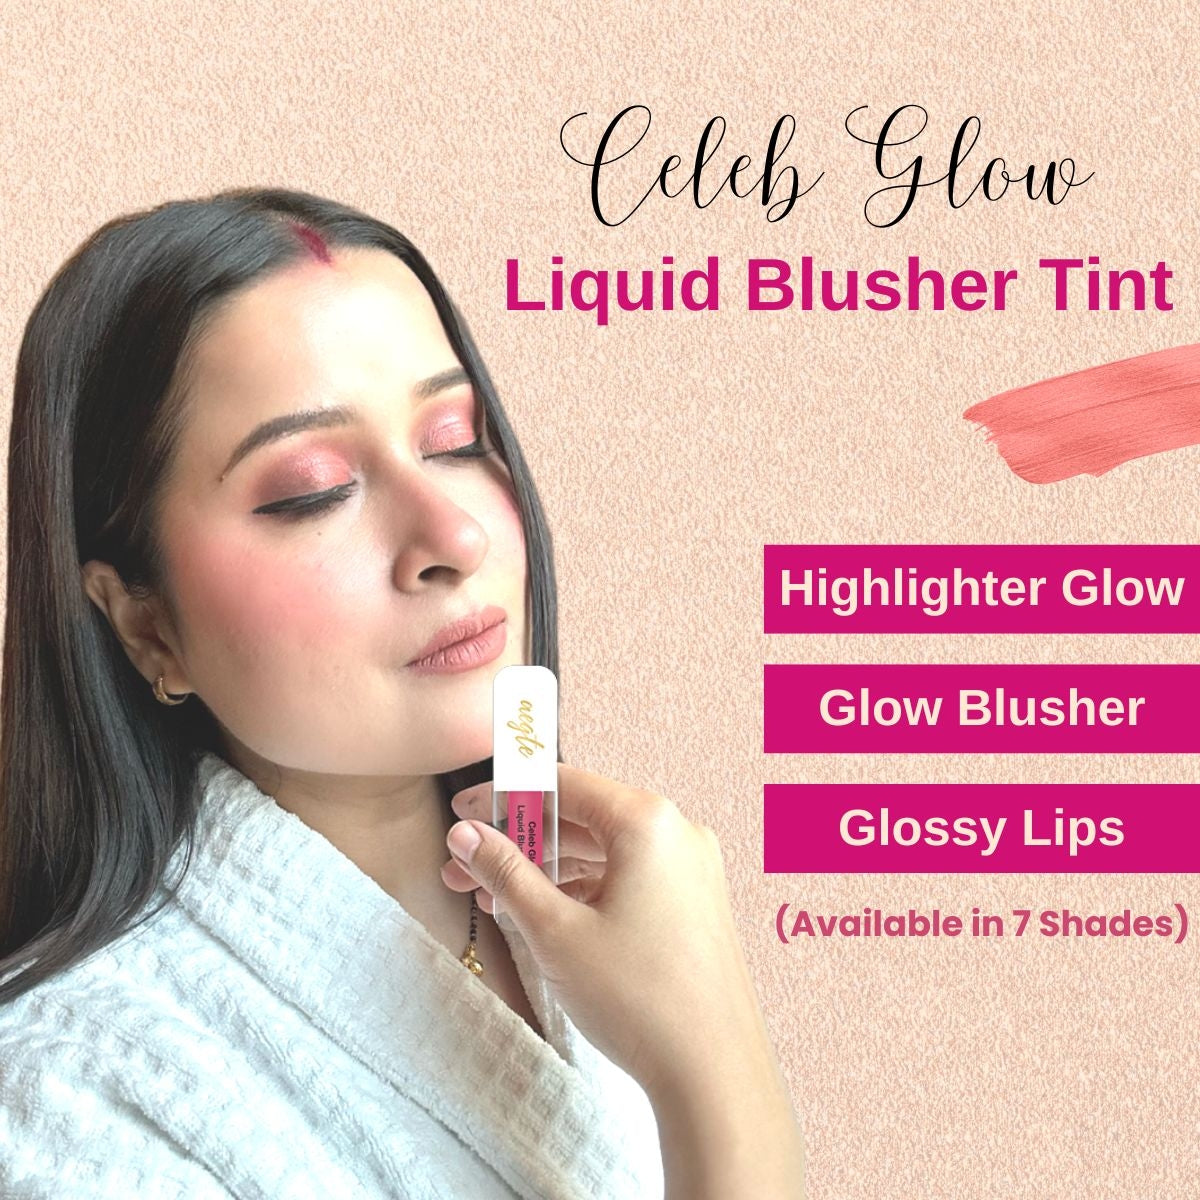 Aegte Celeb Glow Liquid Blusher Tint For Celeb Like Glowing Skin